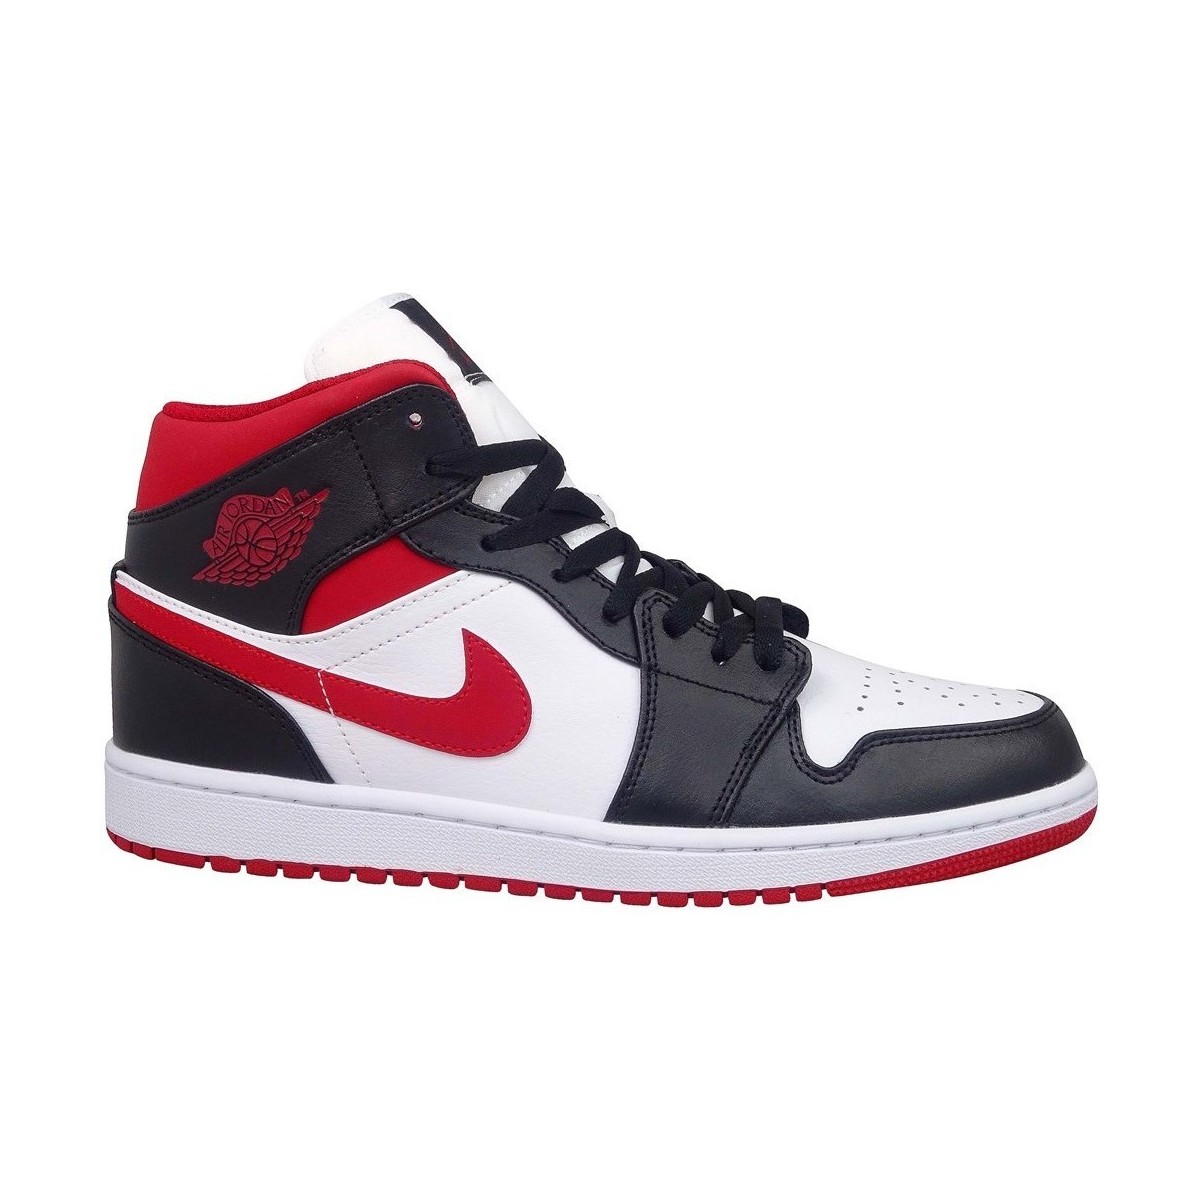 Schuhe Herren Sneaker High Nike Air Jordan 1 Mid Schwarz, Weiß, Rot